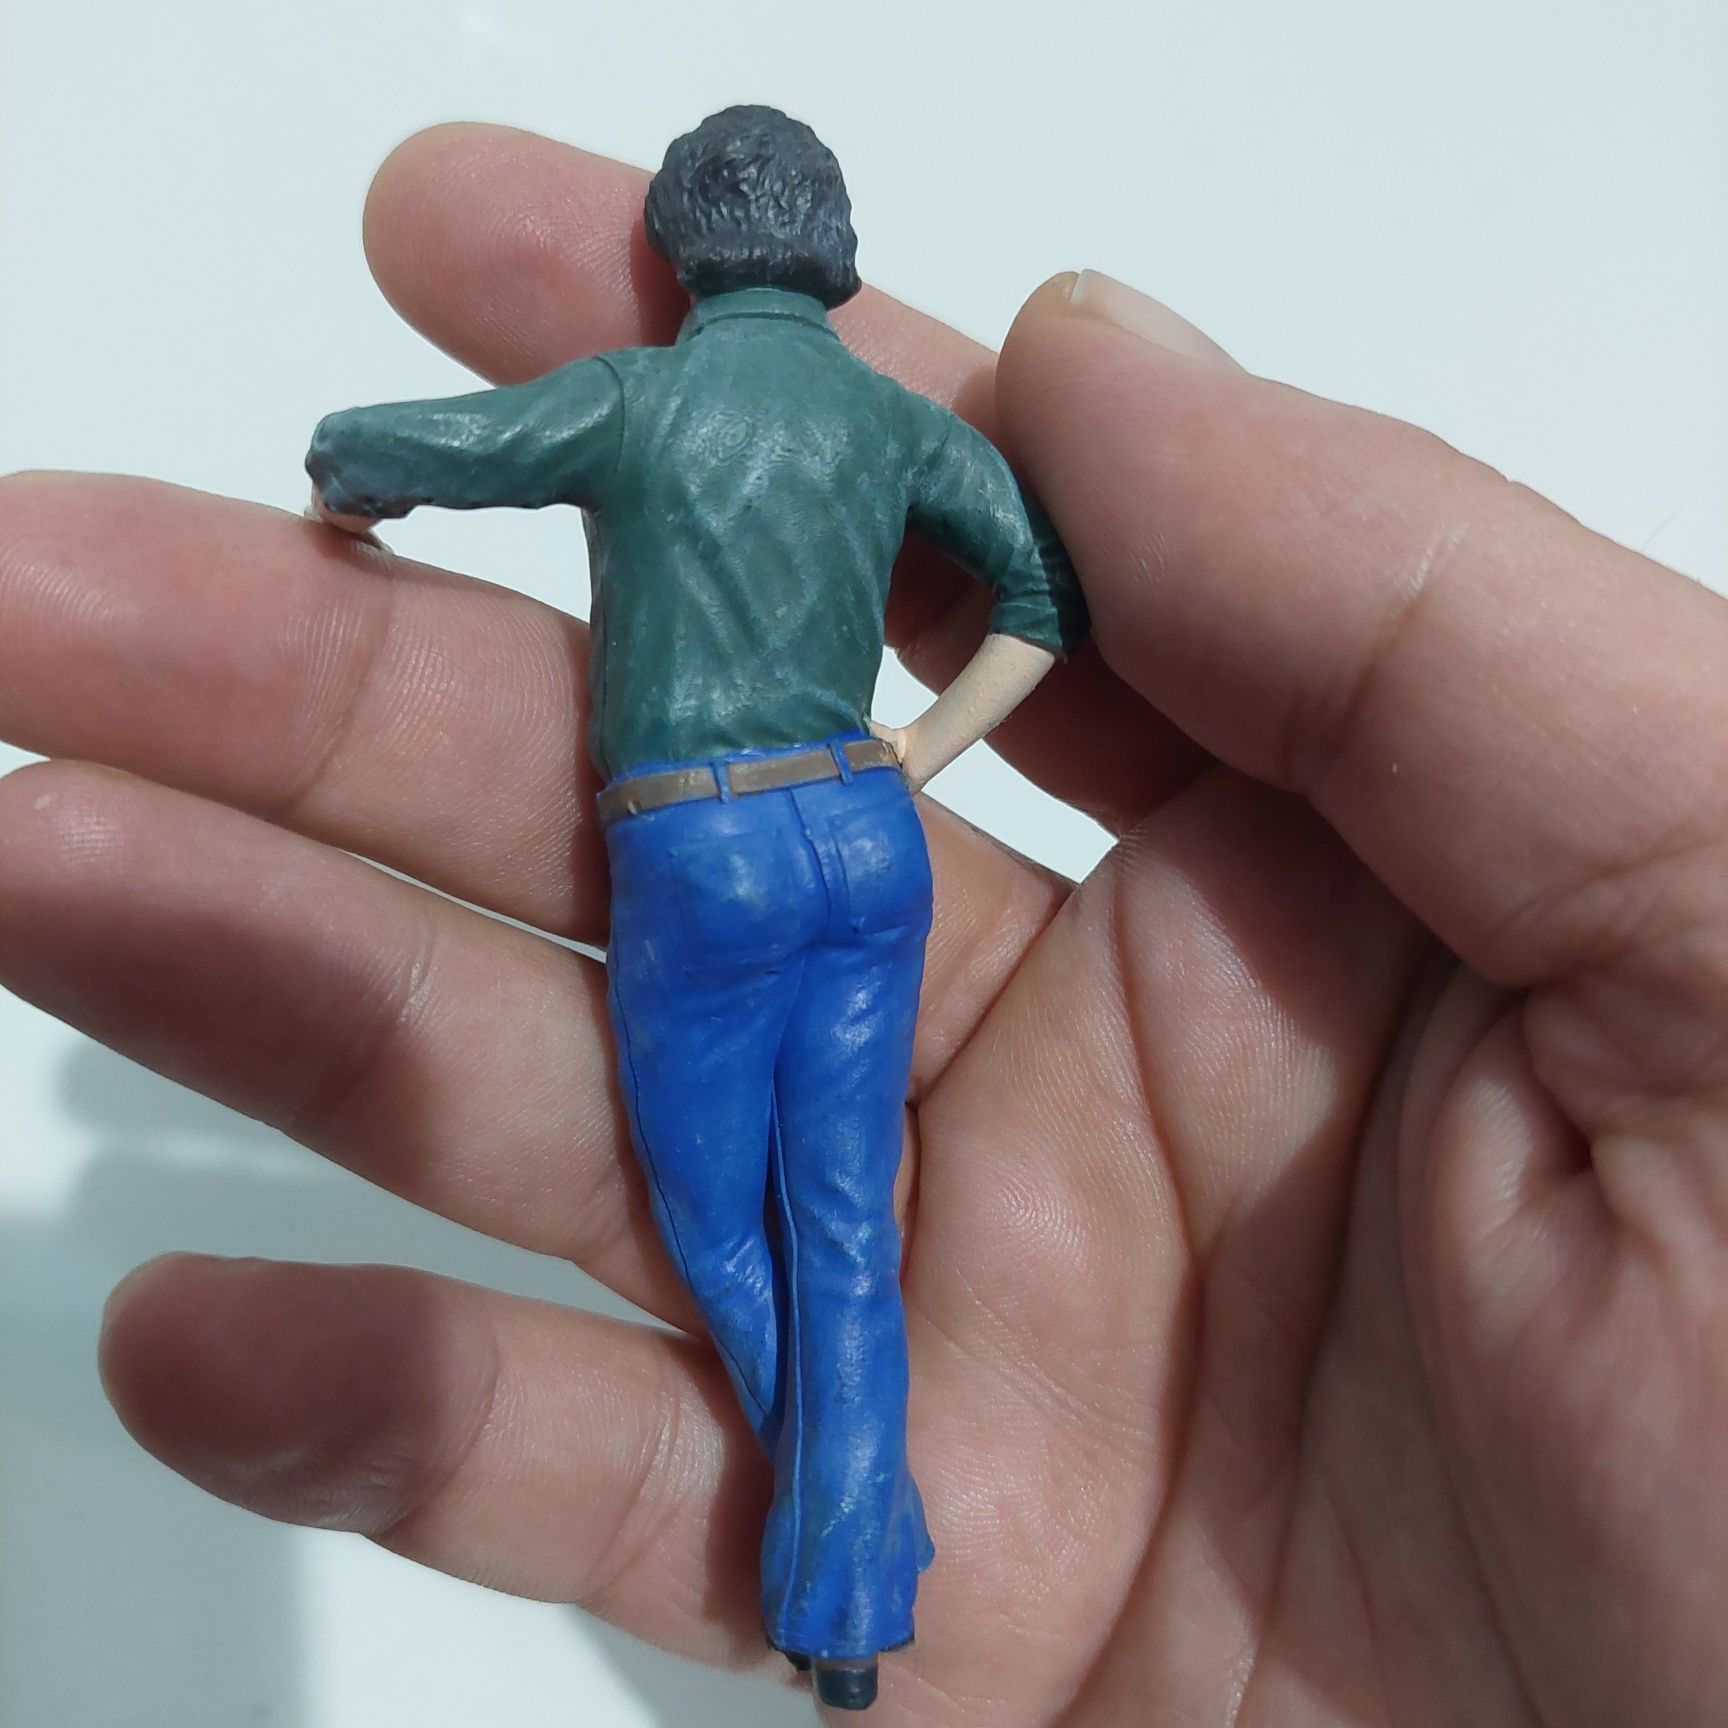 Figurine 1:18 print 3D "Dukes of Hazzard"